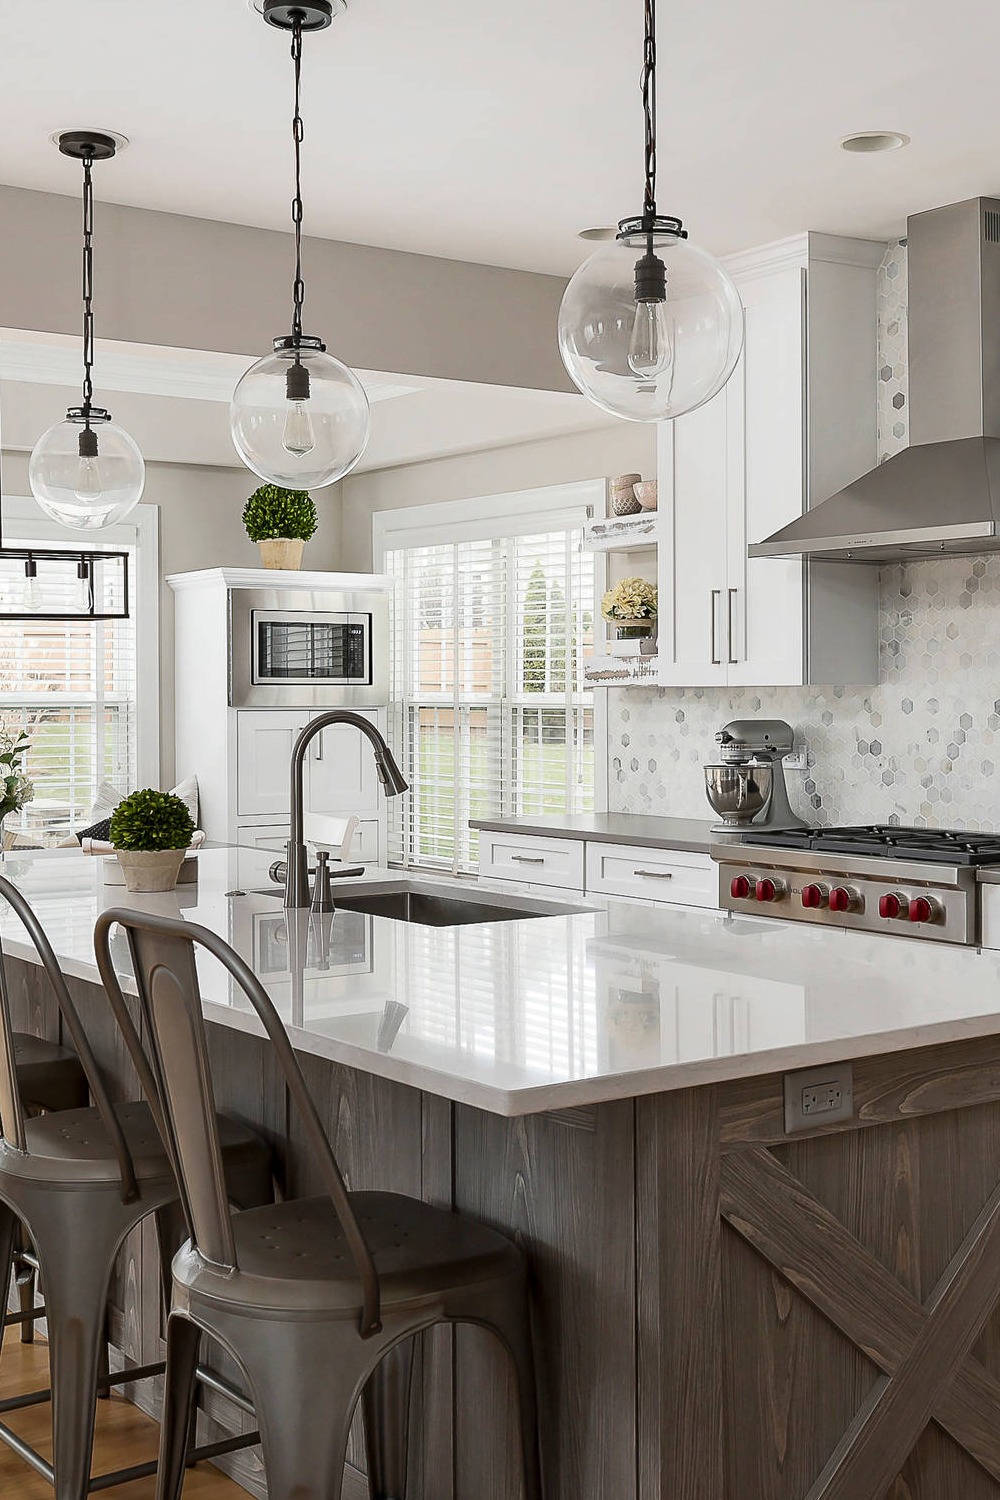 Modern Rustic Kitchen Gray Quartz Countertops Hardwood Floors Pendant Lights Wooden Elements